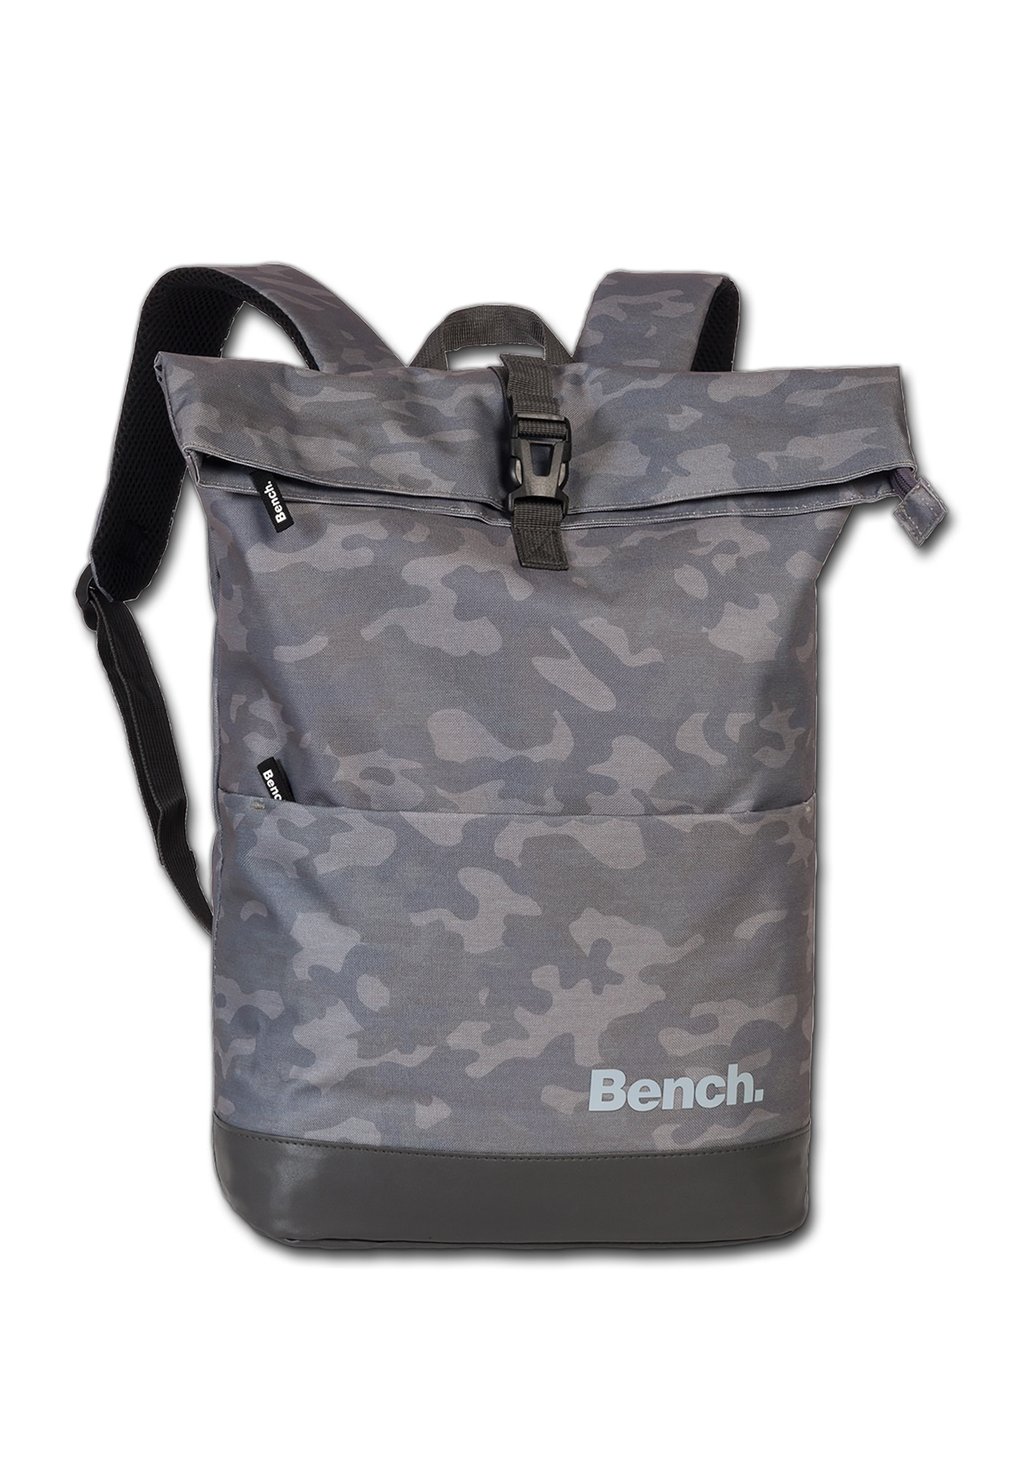 Рюкзак Bench, цвет grau, zement, tarn